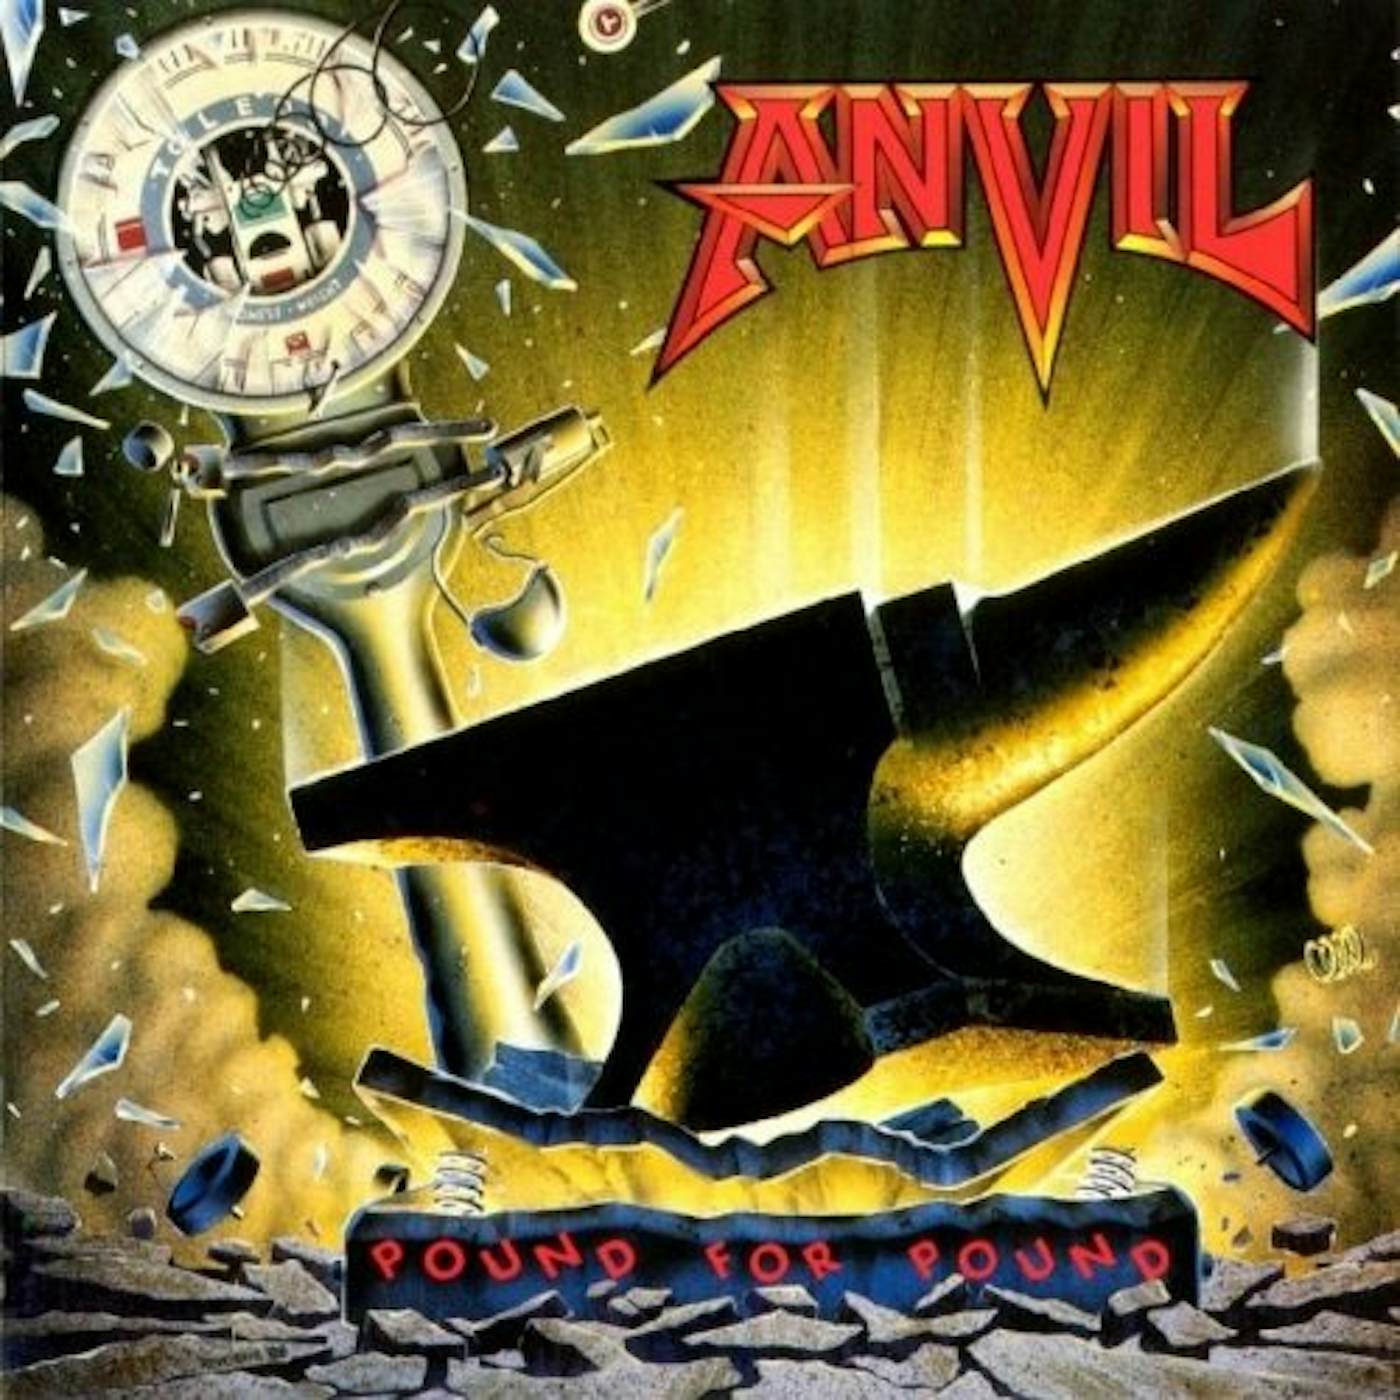 Anvil Pound For Pound Vinyl Record